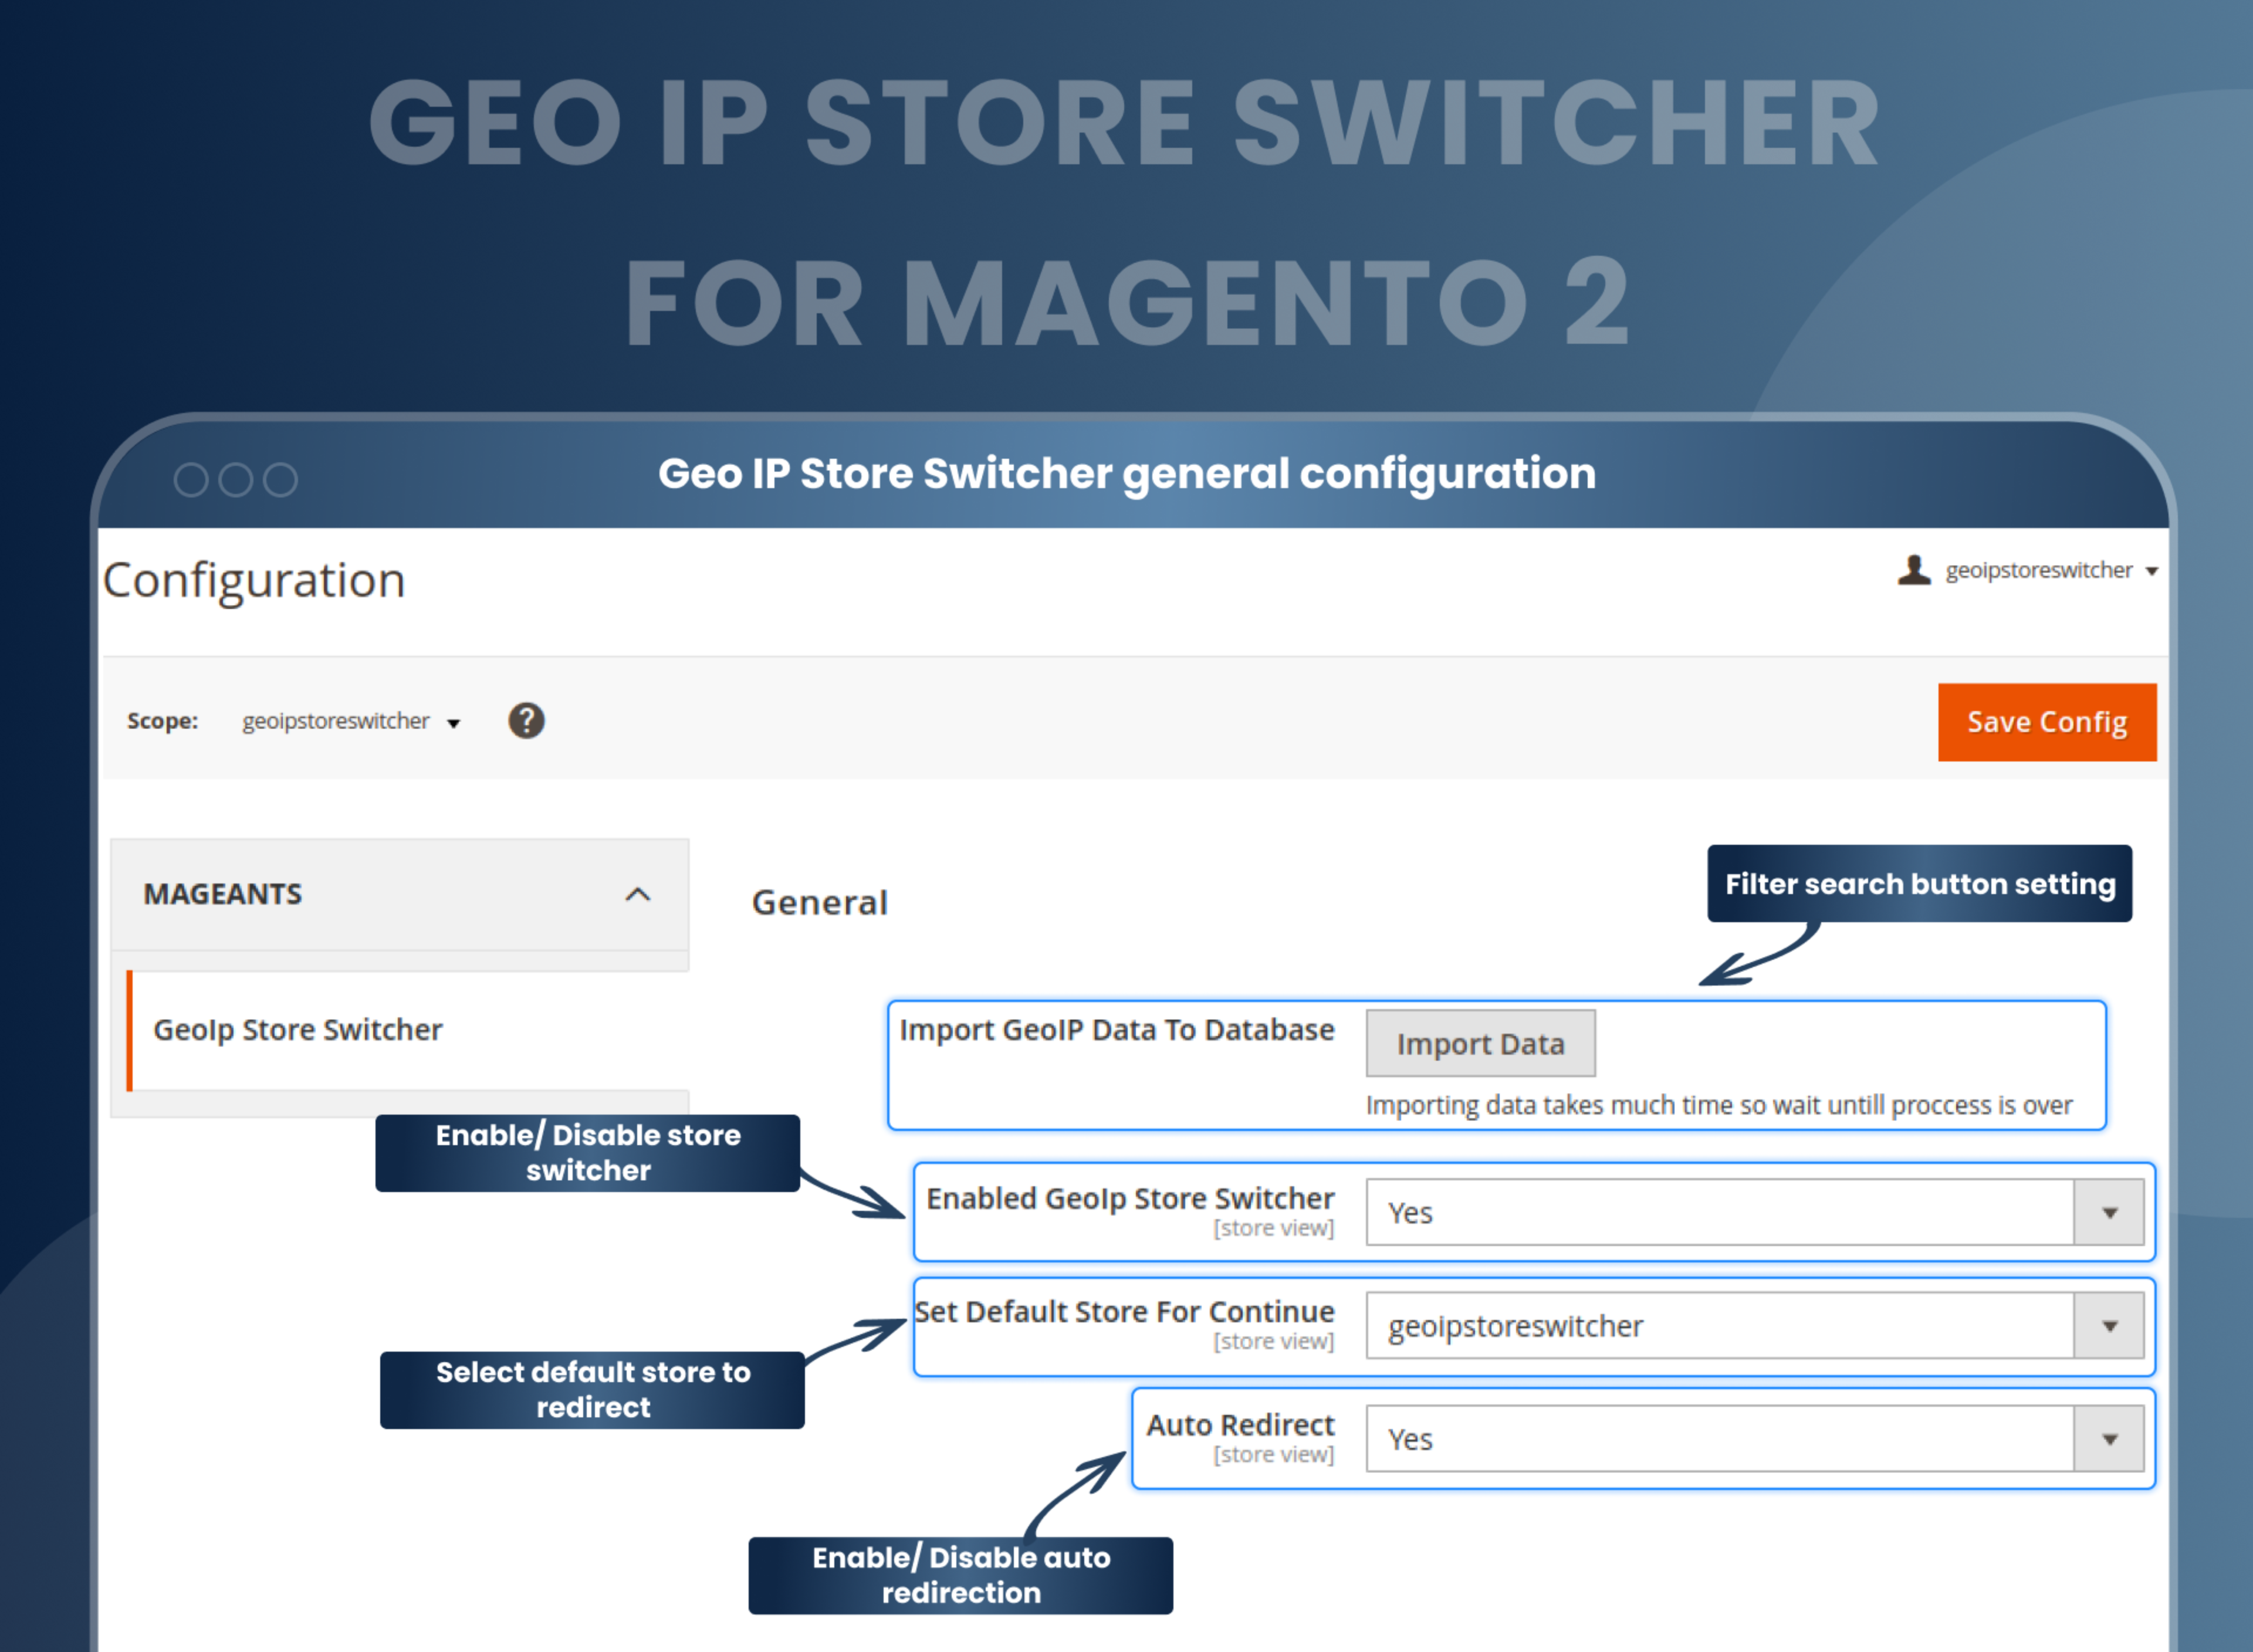  Geo IP Store Switcher general configuration